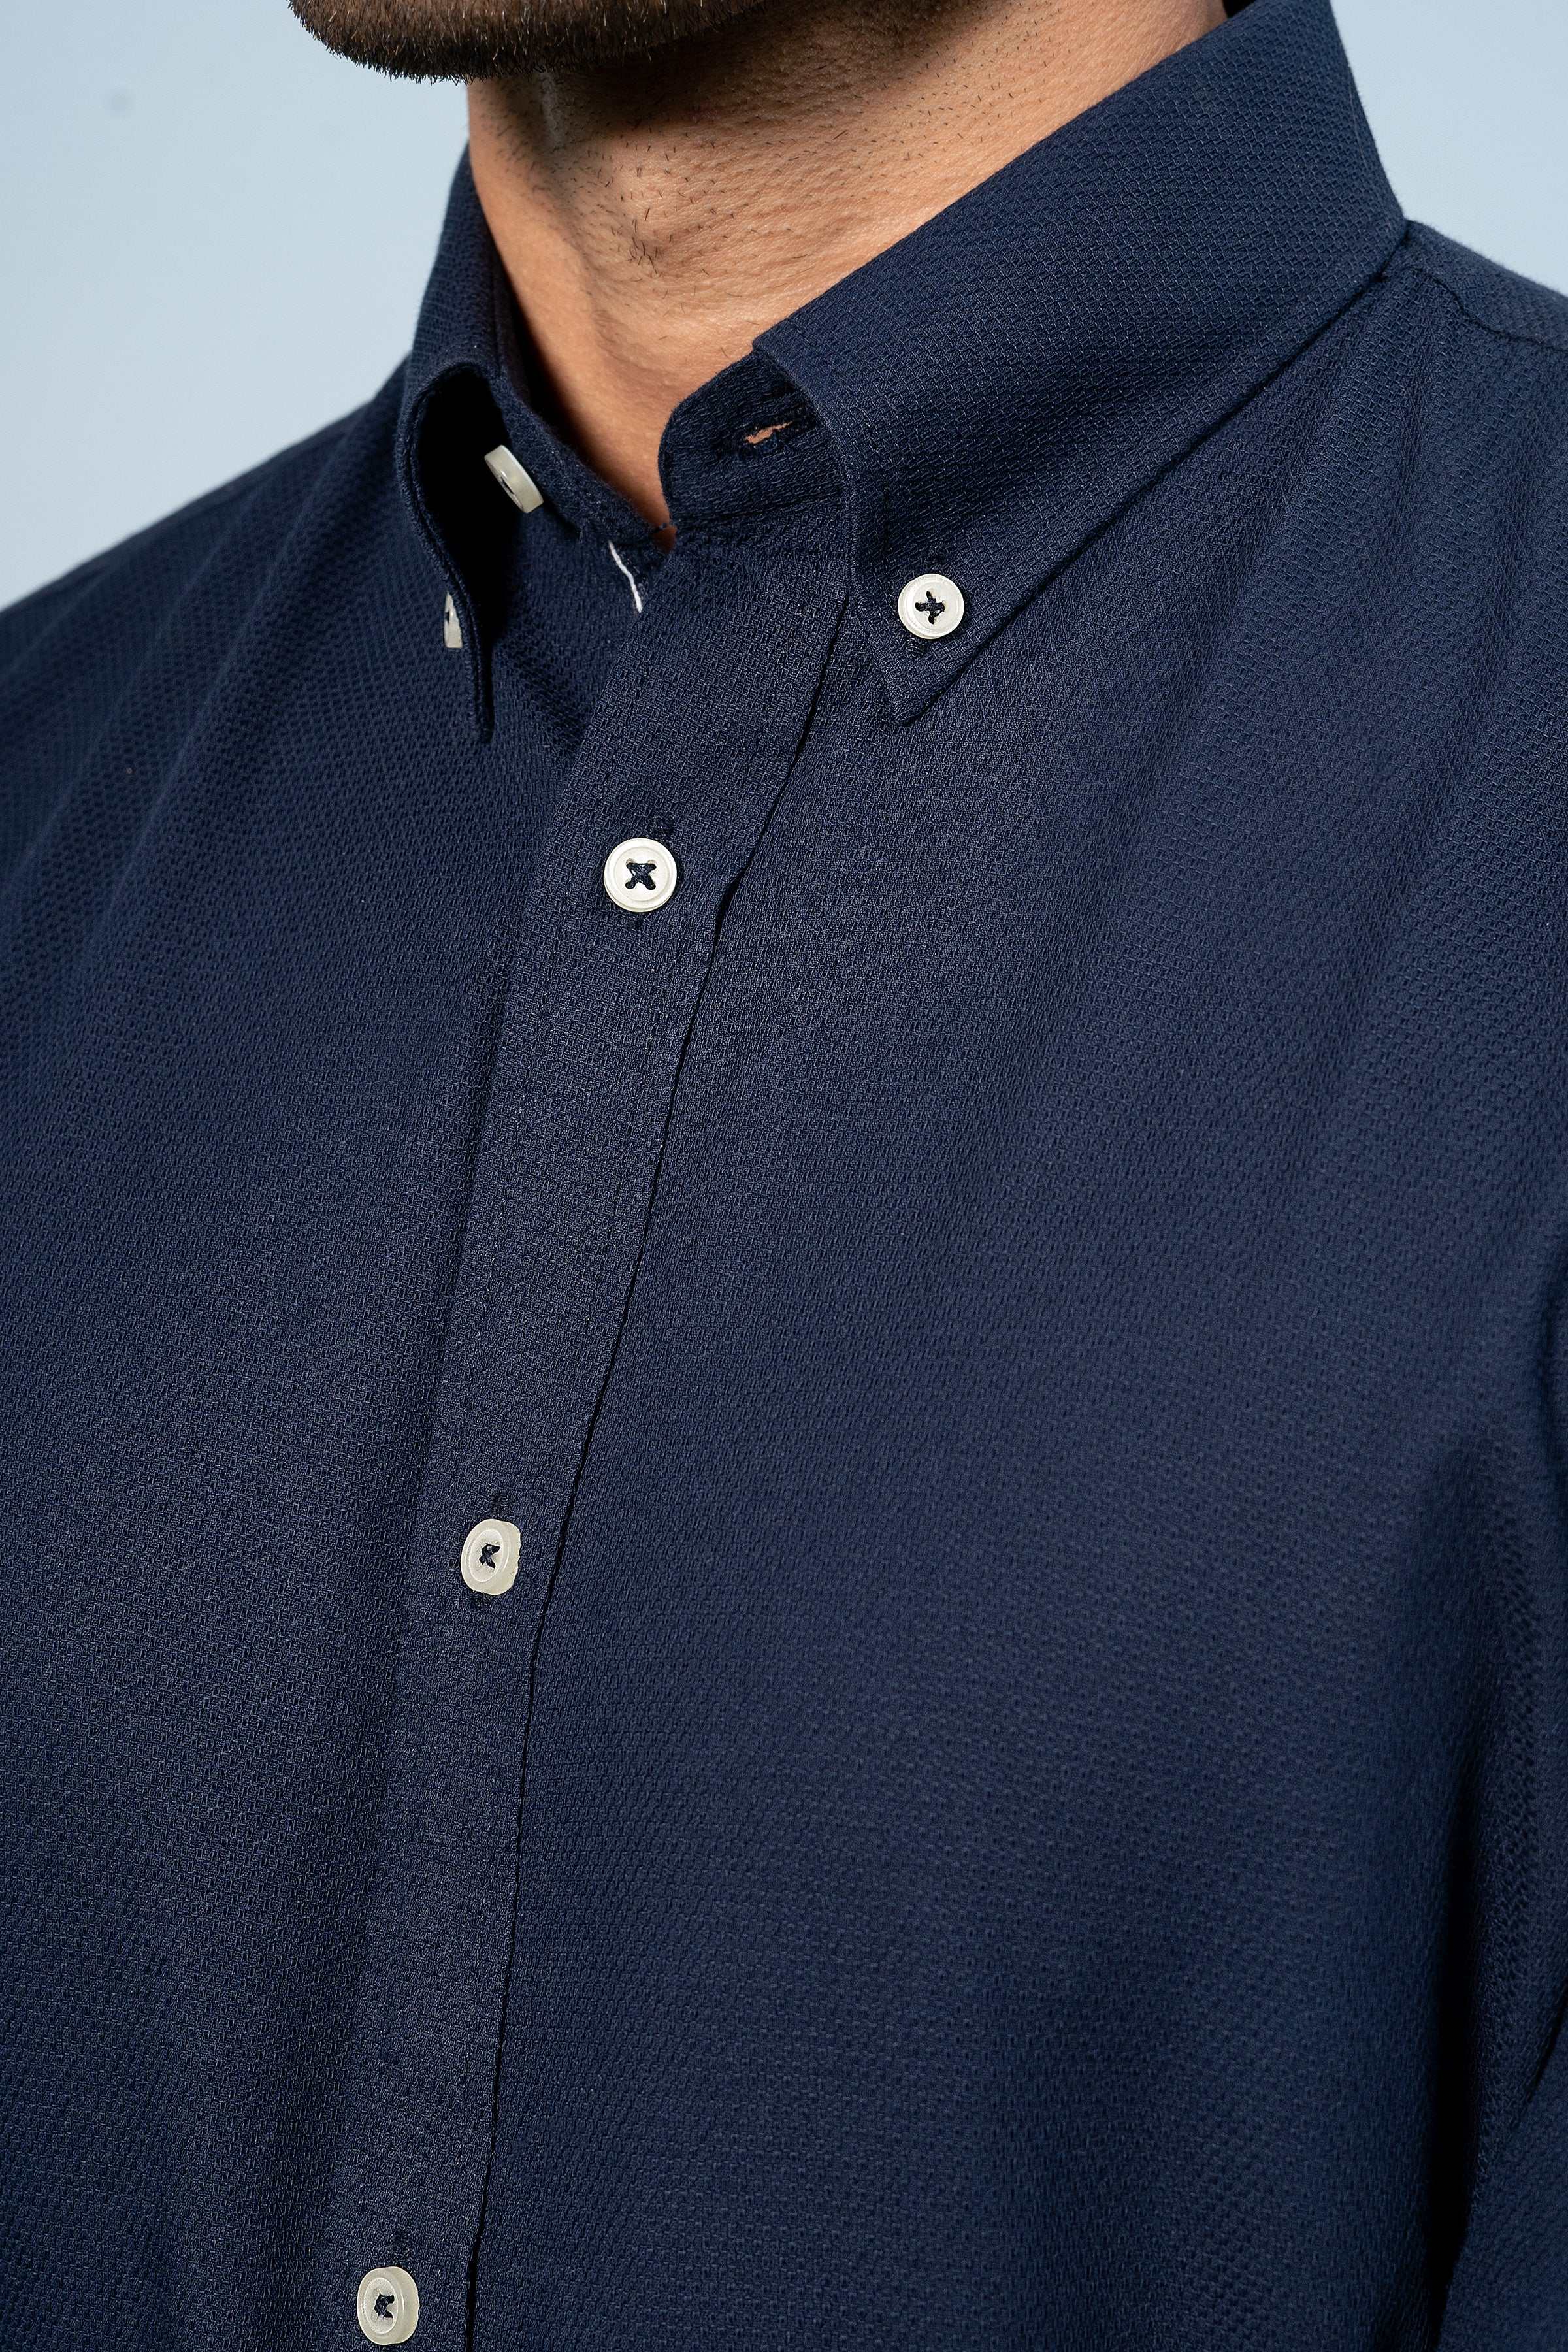 SMART SHIRT NAVY BLUE - Charcoal Clothing